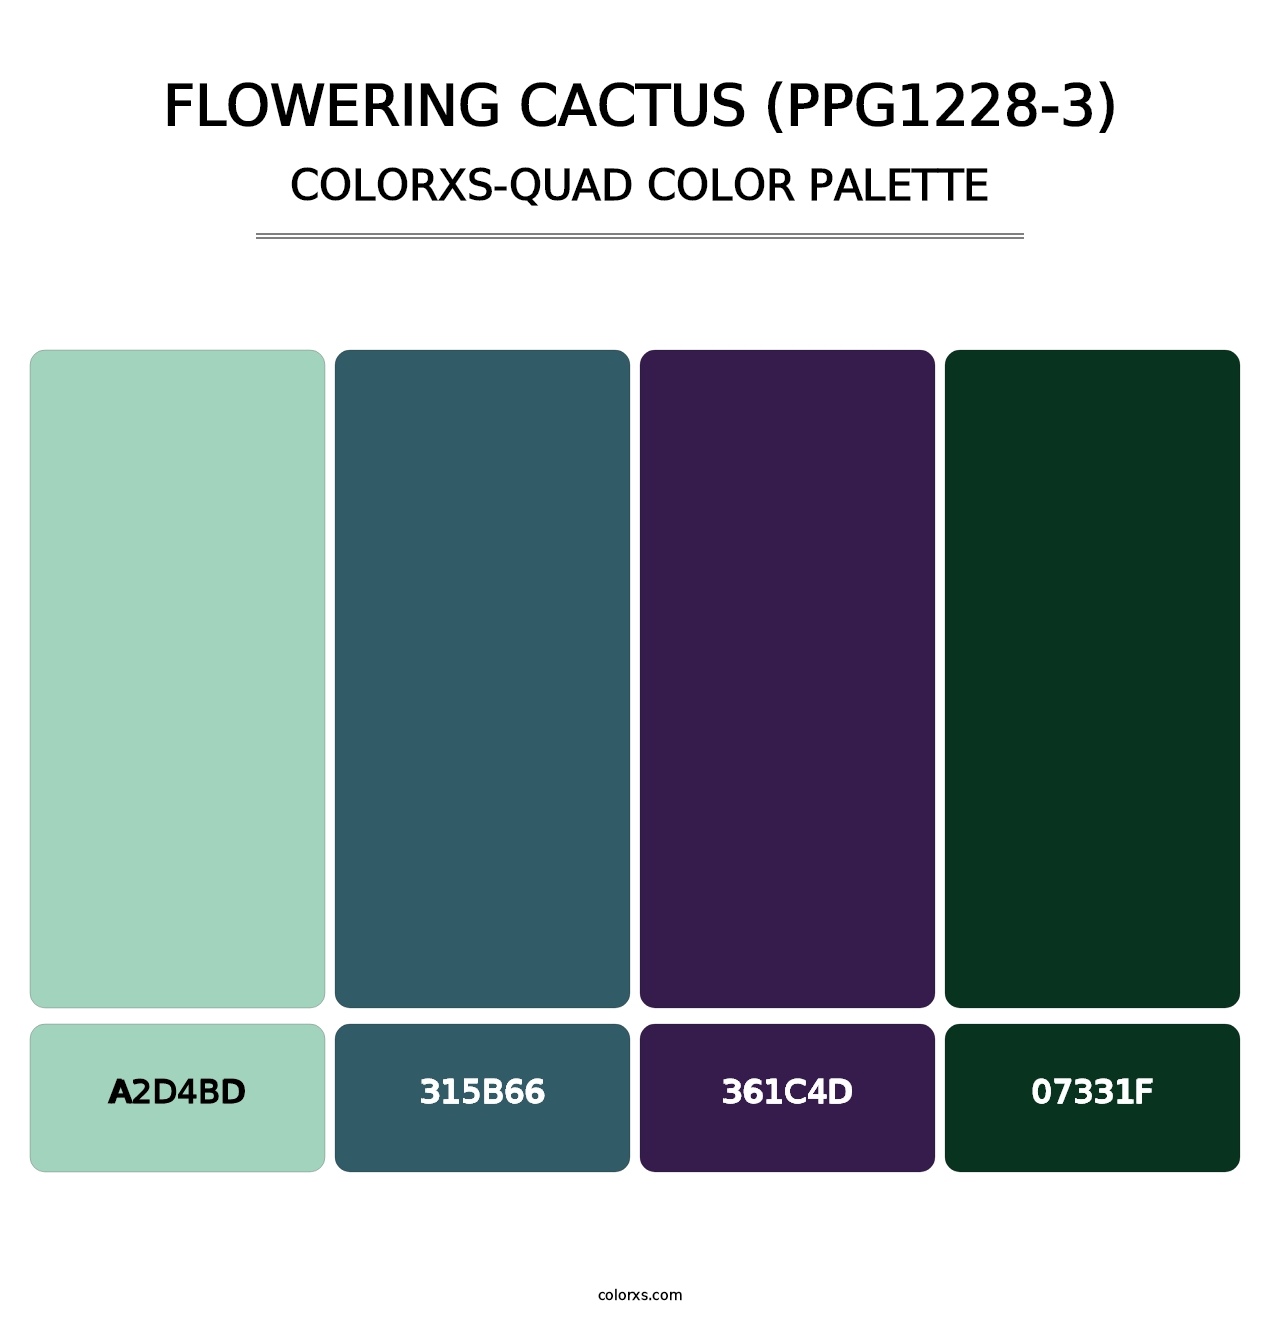 Flowering Cactus (PPG1228-3) - Colorxs Quad Palette